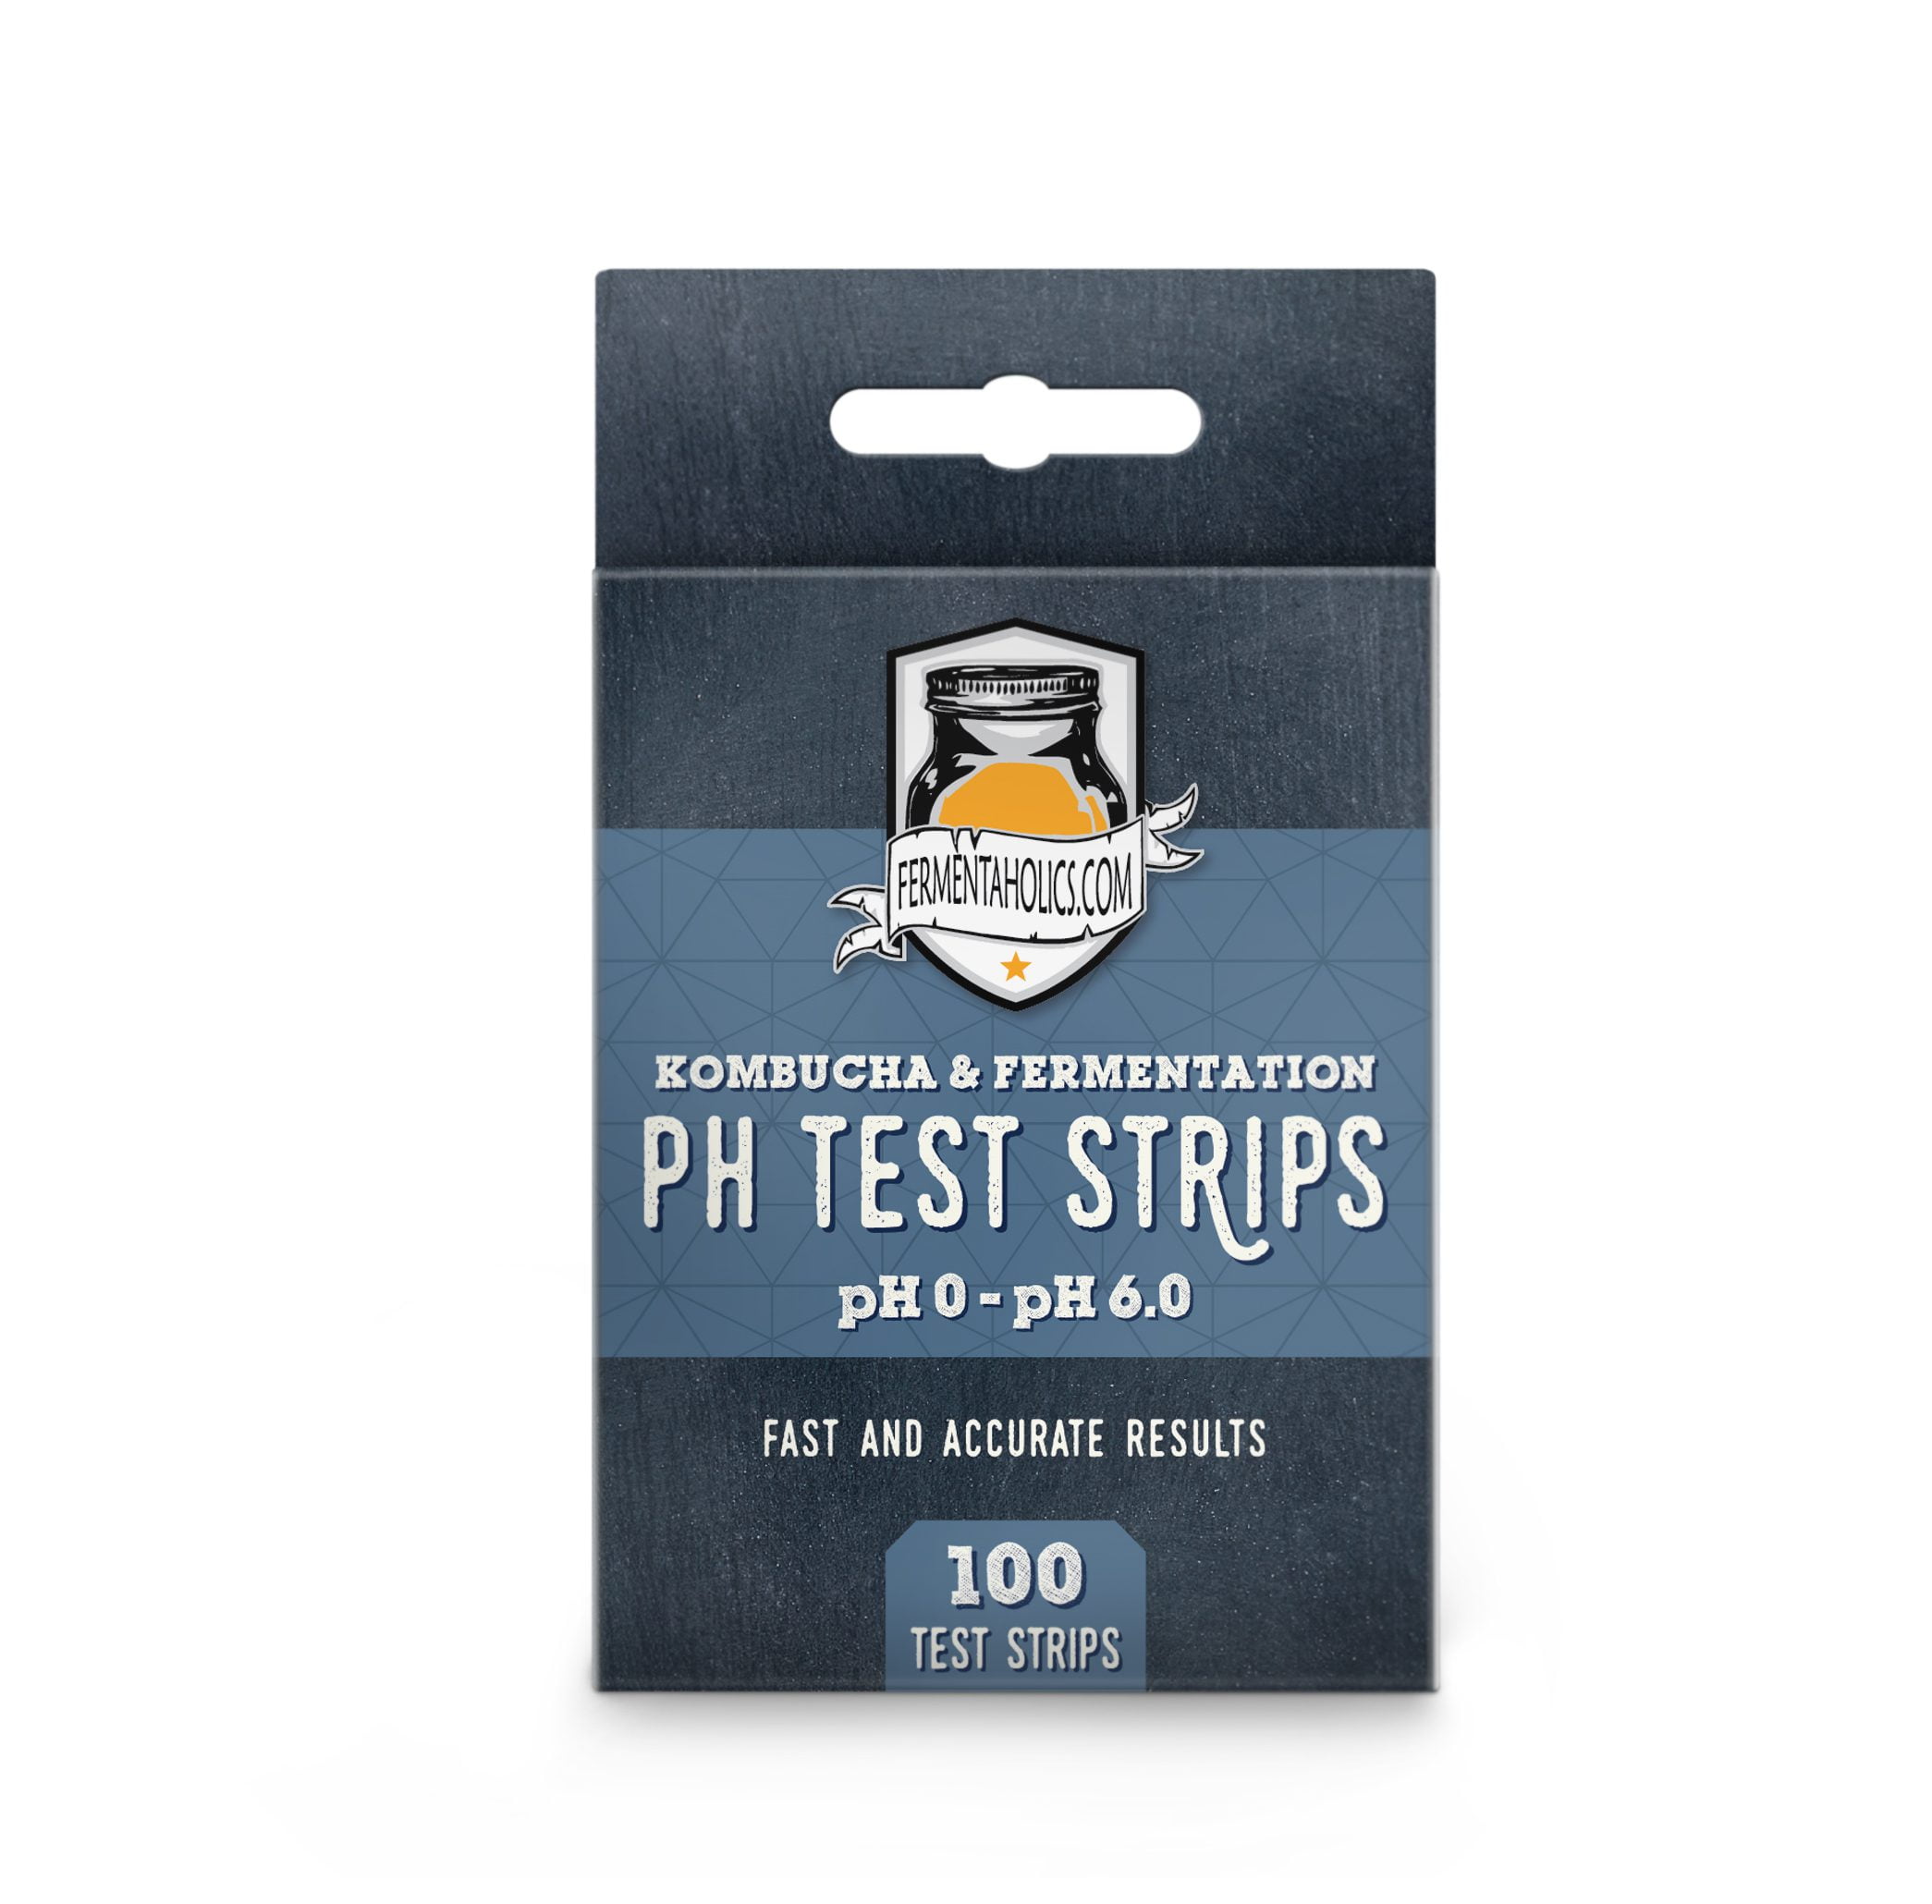 Ph test strips